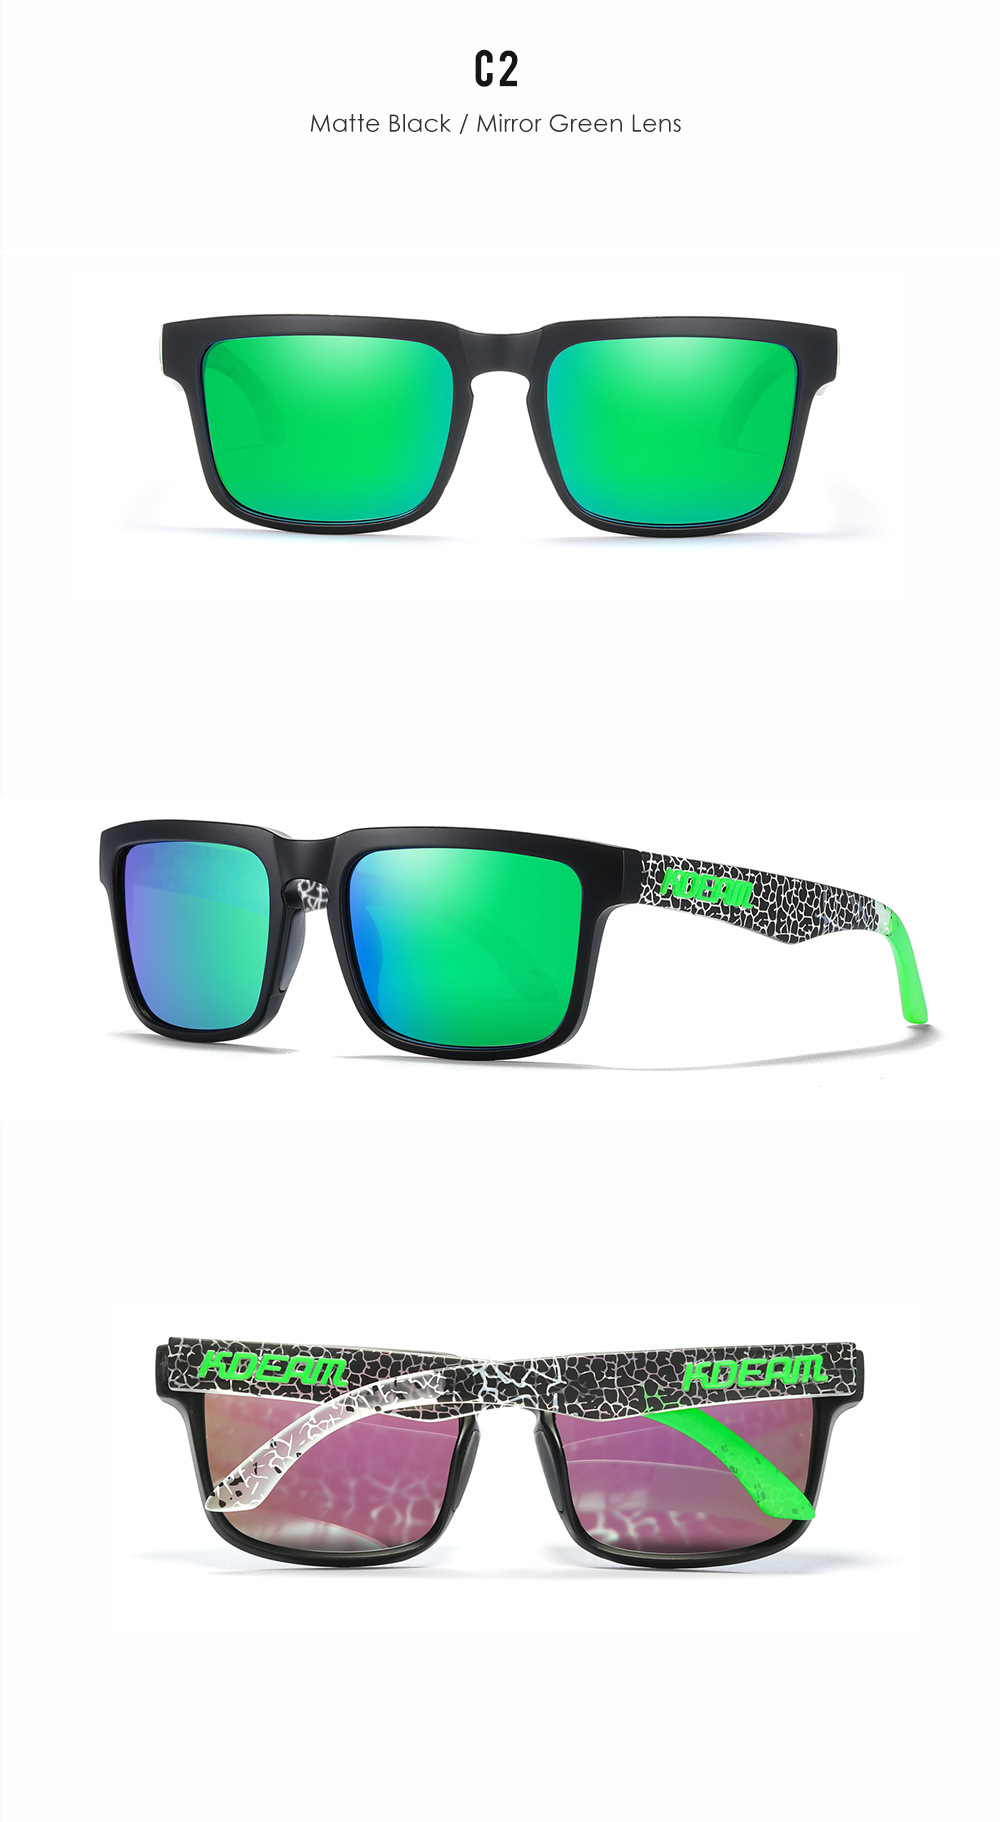 KDEAM Designer Polarized Sunglasses